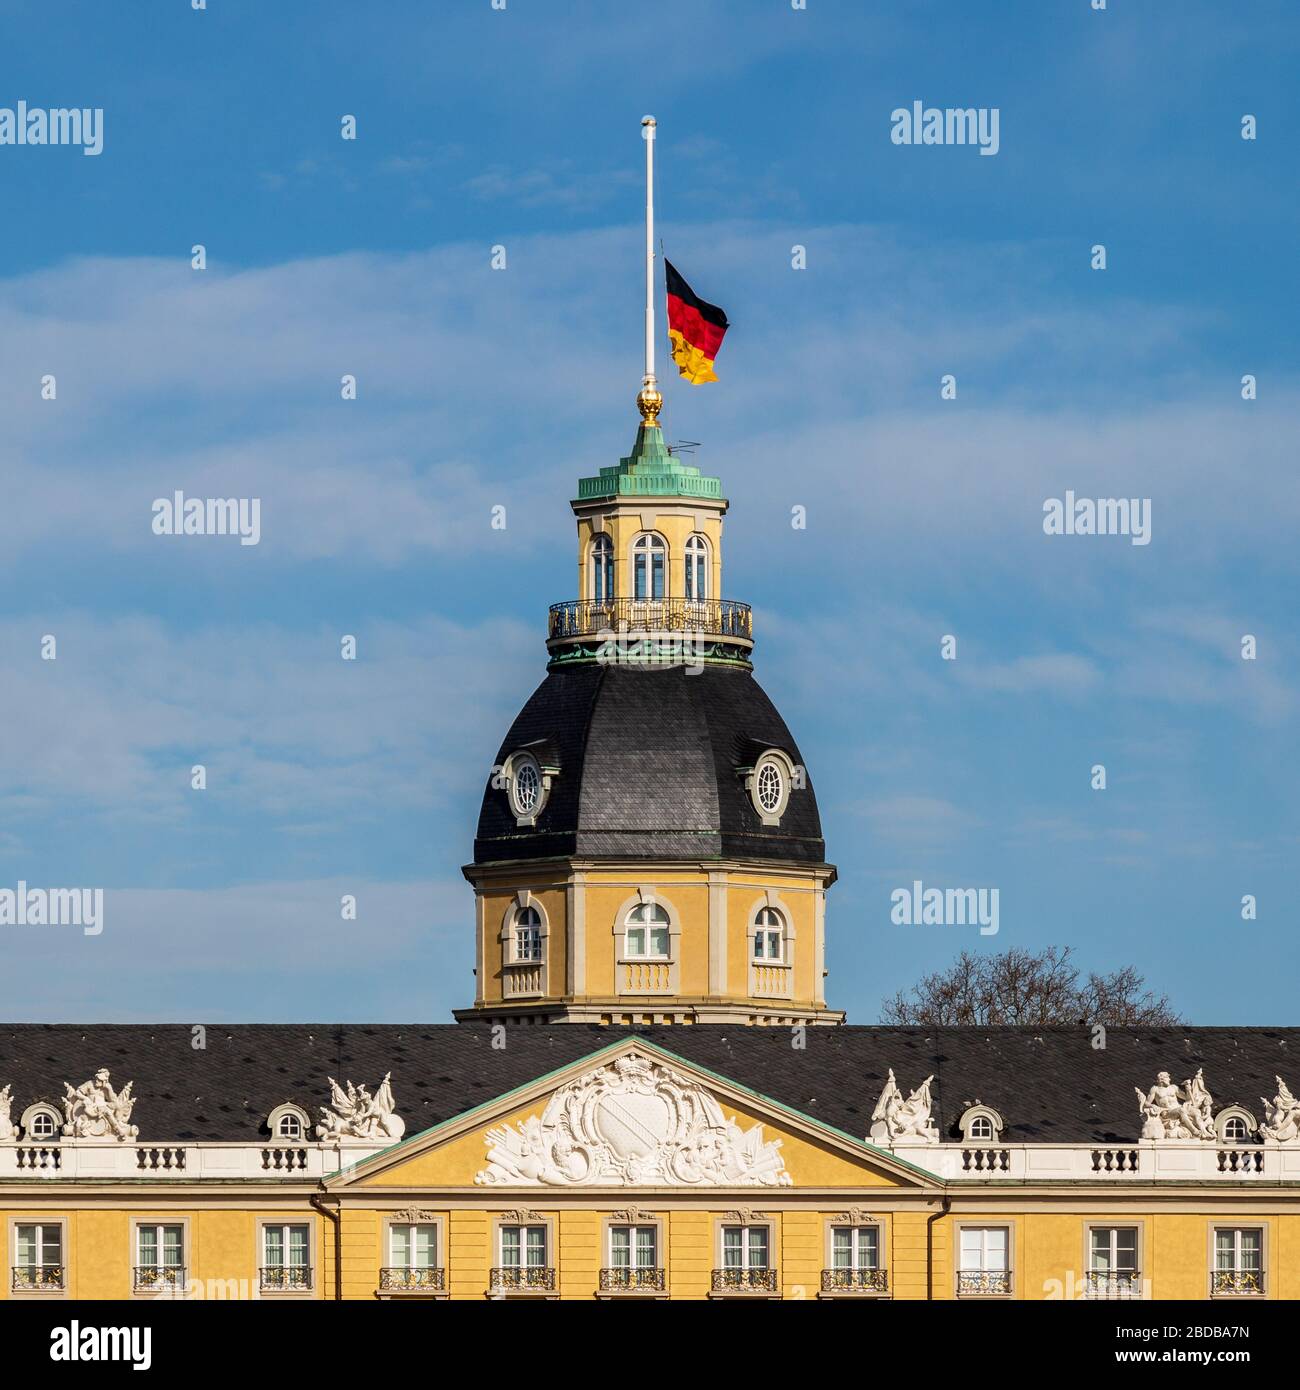 Bandiera tedesca a Halfmast, auf Halbmast, sulla cima del Castello di Karlsruhe in inverno. A Karlsruhe, Baden-Württemberg, Germania Foto Stock